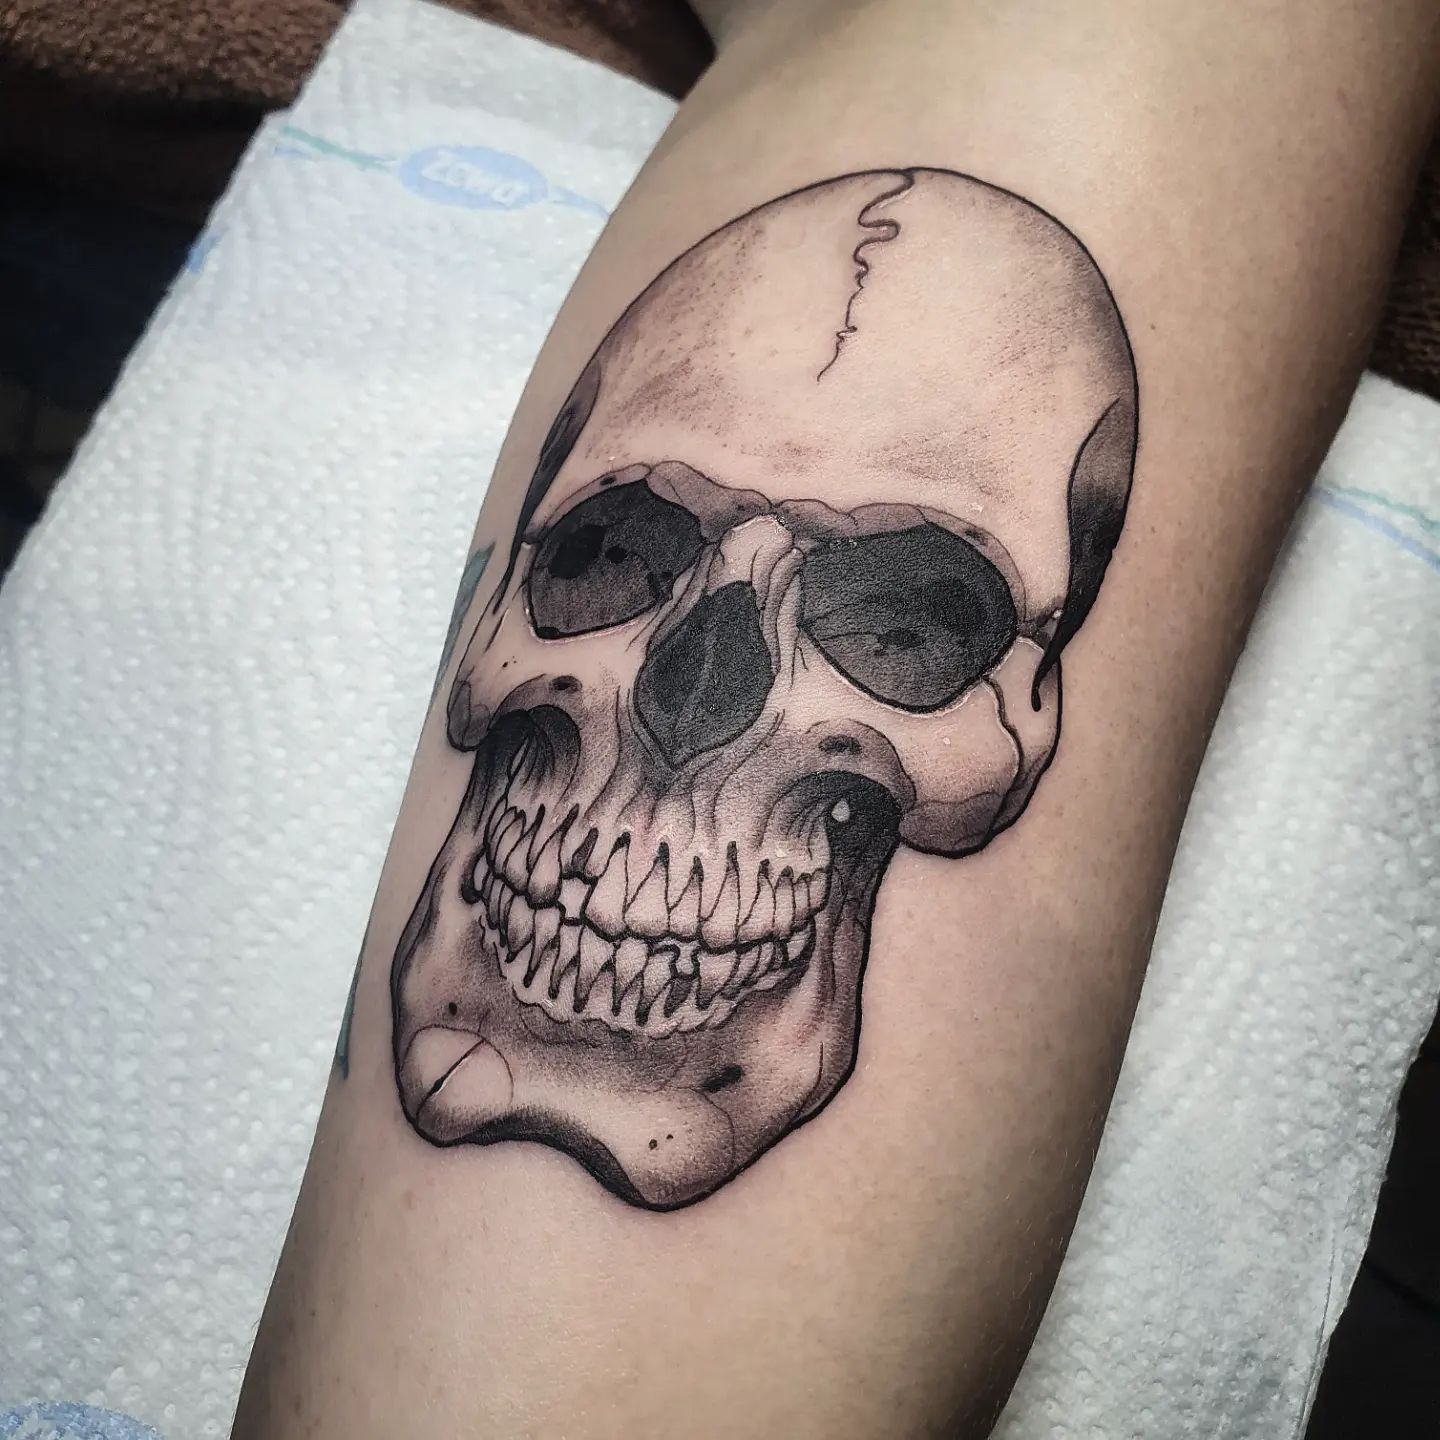 Skull for bae @kathi_tree
.
#tattoo #tattoos #skull #ink #inked #tattooartist #t